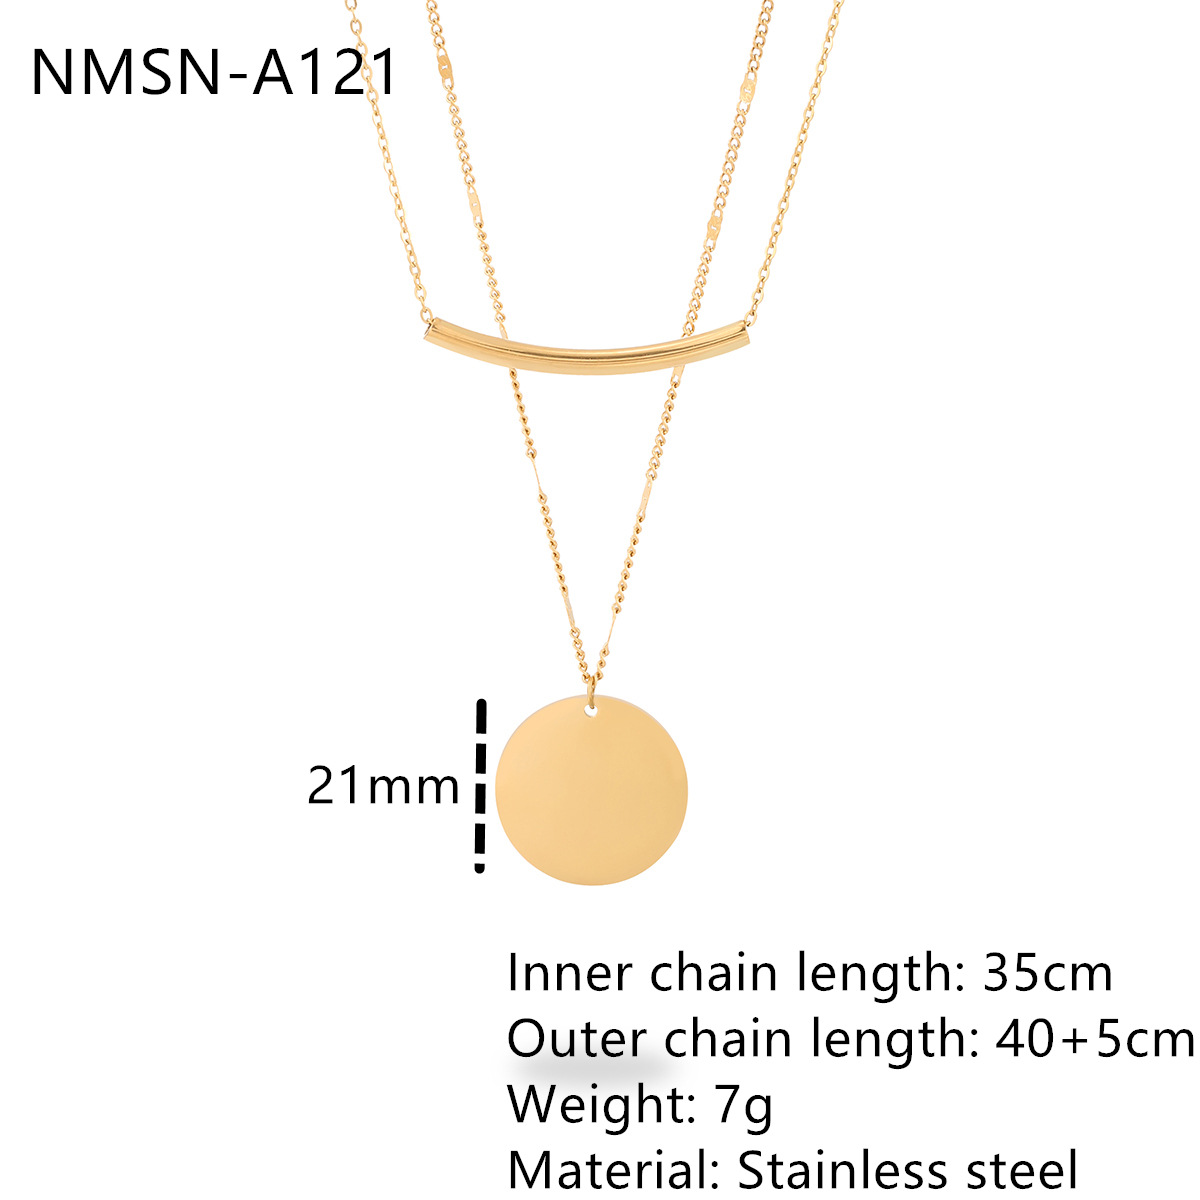 1:NMSN-A121